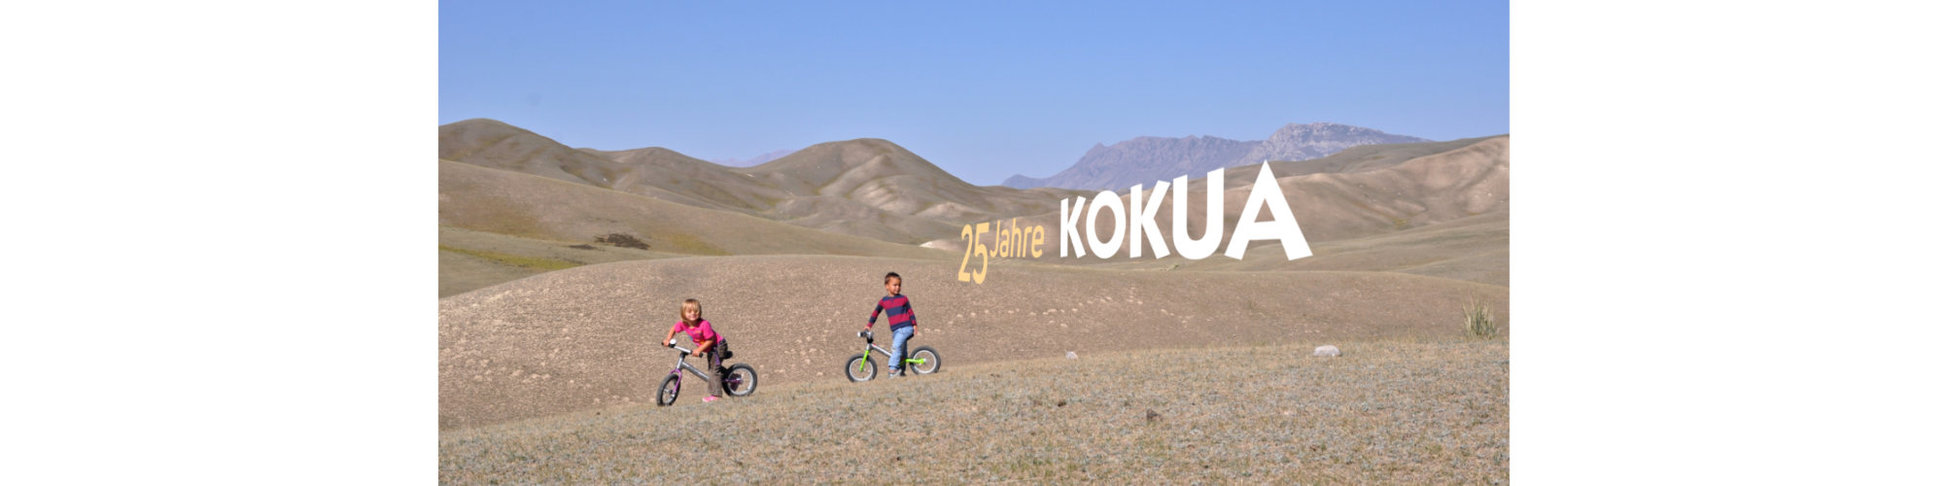 Kokua LIKEtoBIKE Kinderfahrrad von Kokua, 16s SRAM Automatix, 16  Zoll, ocean ab 3 Jahren